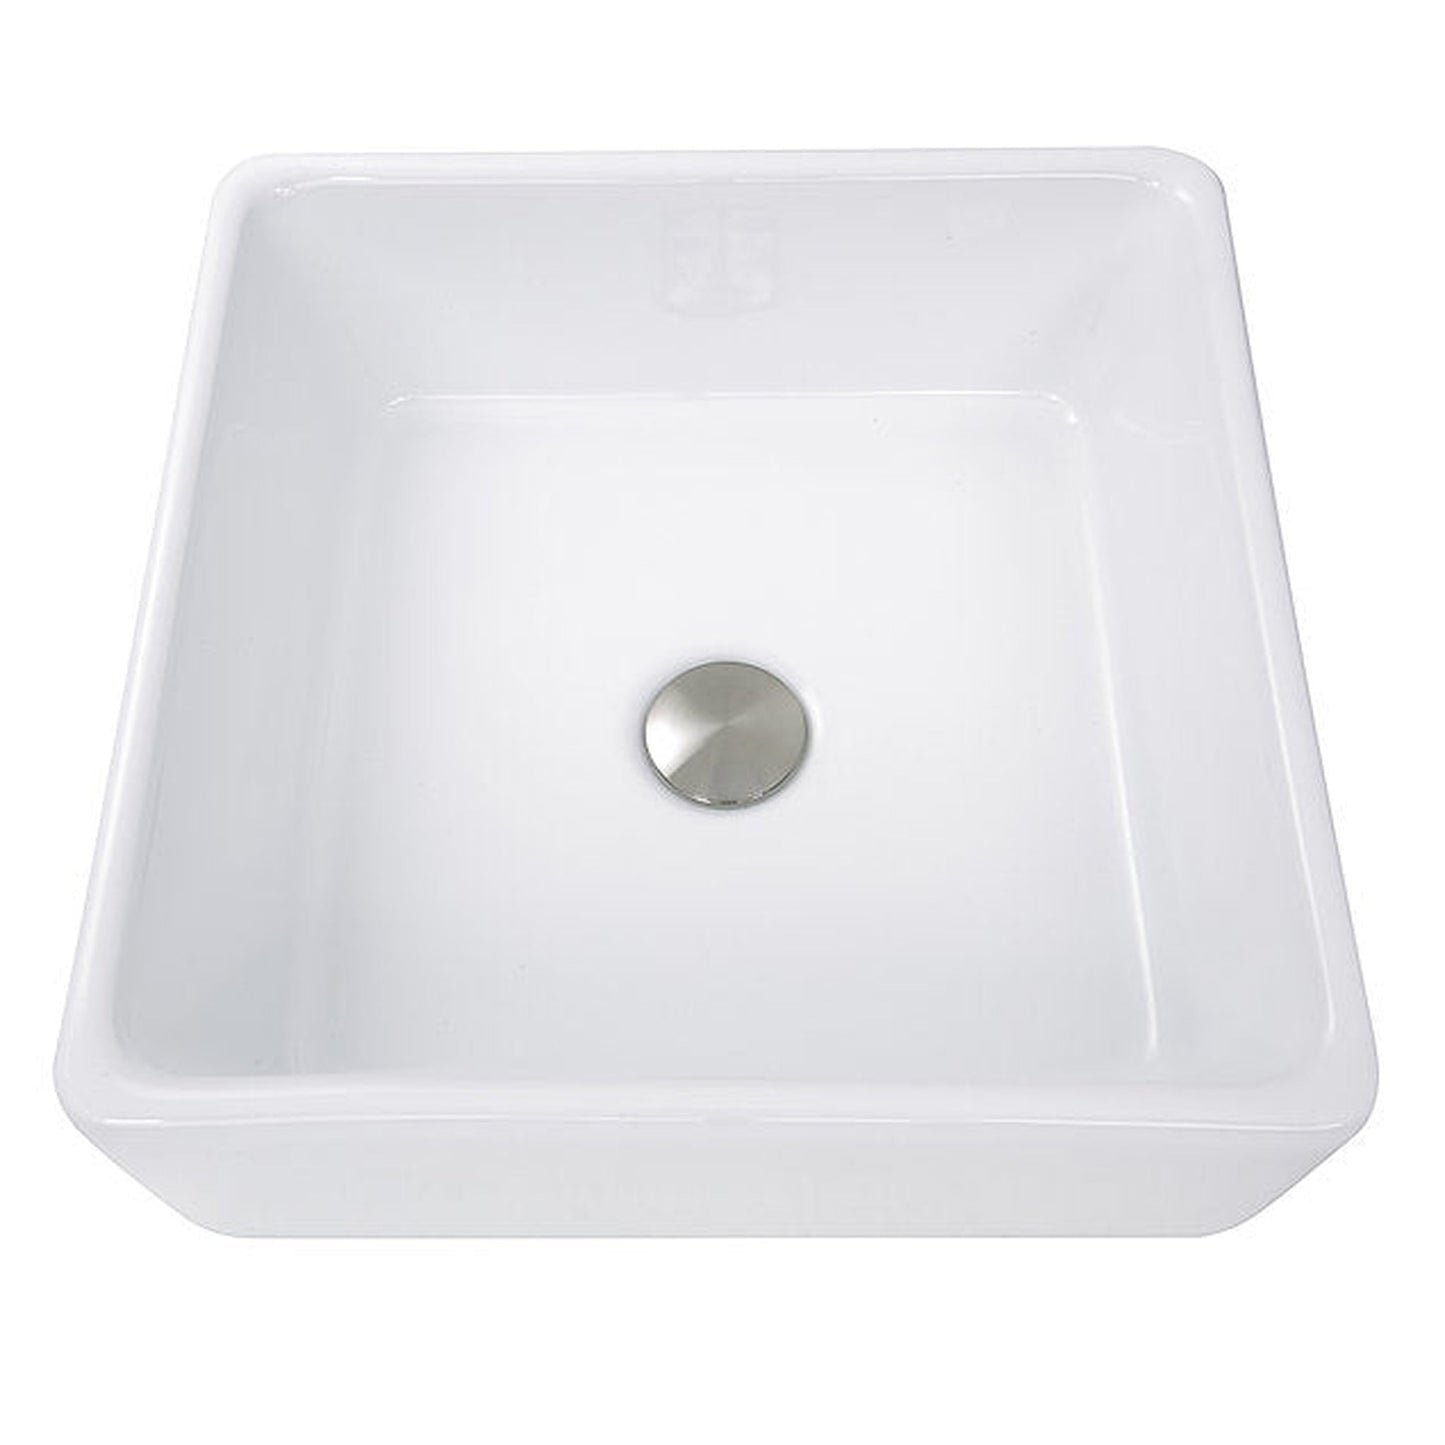 Nantucket Sinks Brant Point 15" W x 15" D Square Porcelain Enamel Glazed White Ceramic Vessel Sink